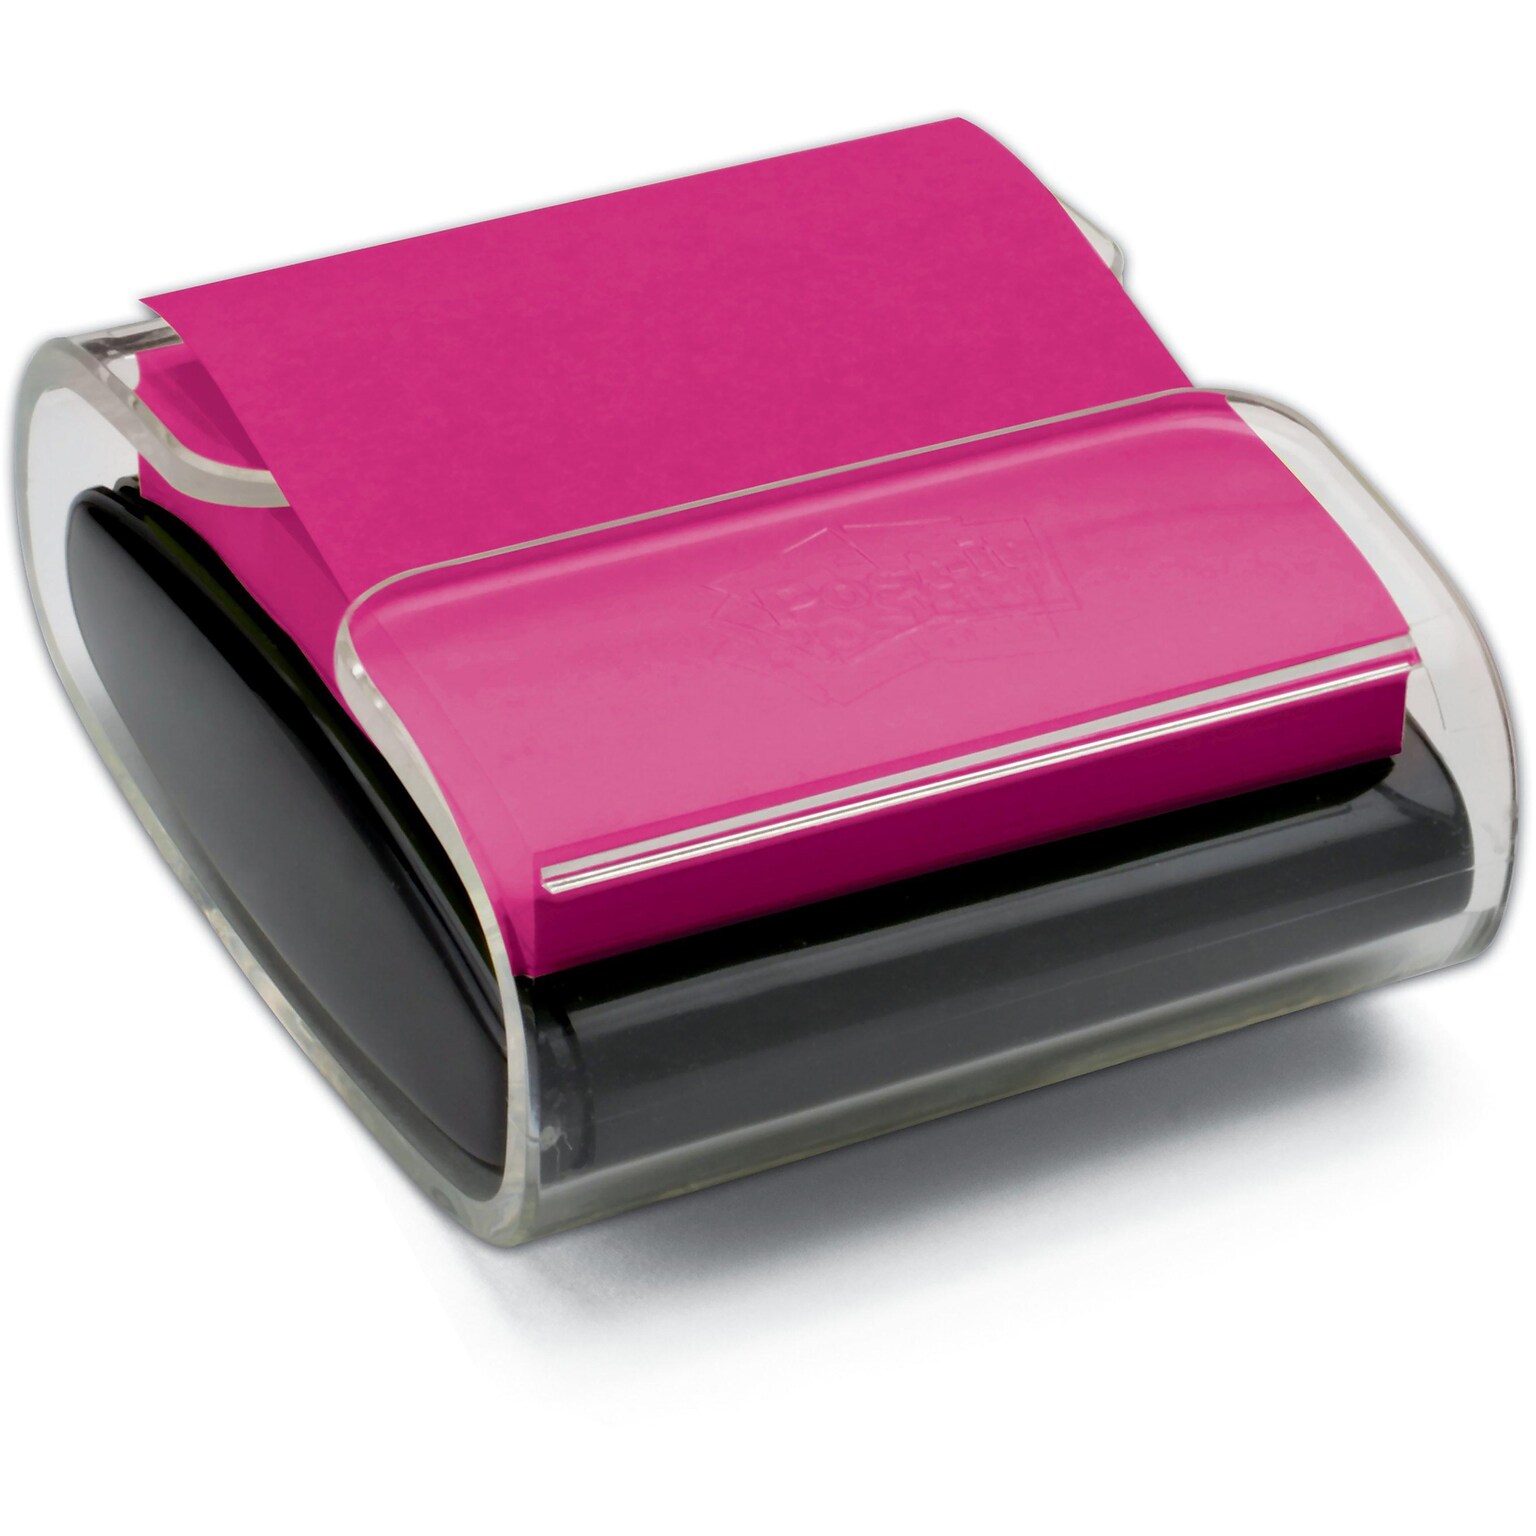 Post-it® Pop-Up Notes Dispenser for 3 x 3 Notes, Black (WD-330-BK)